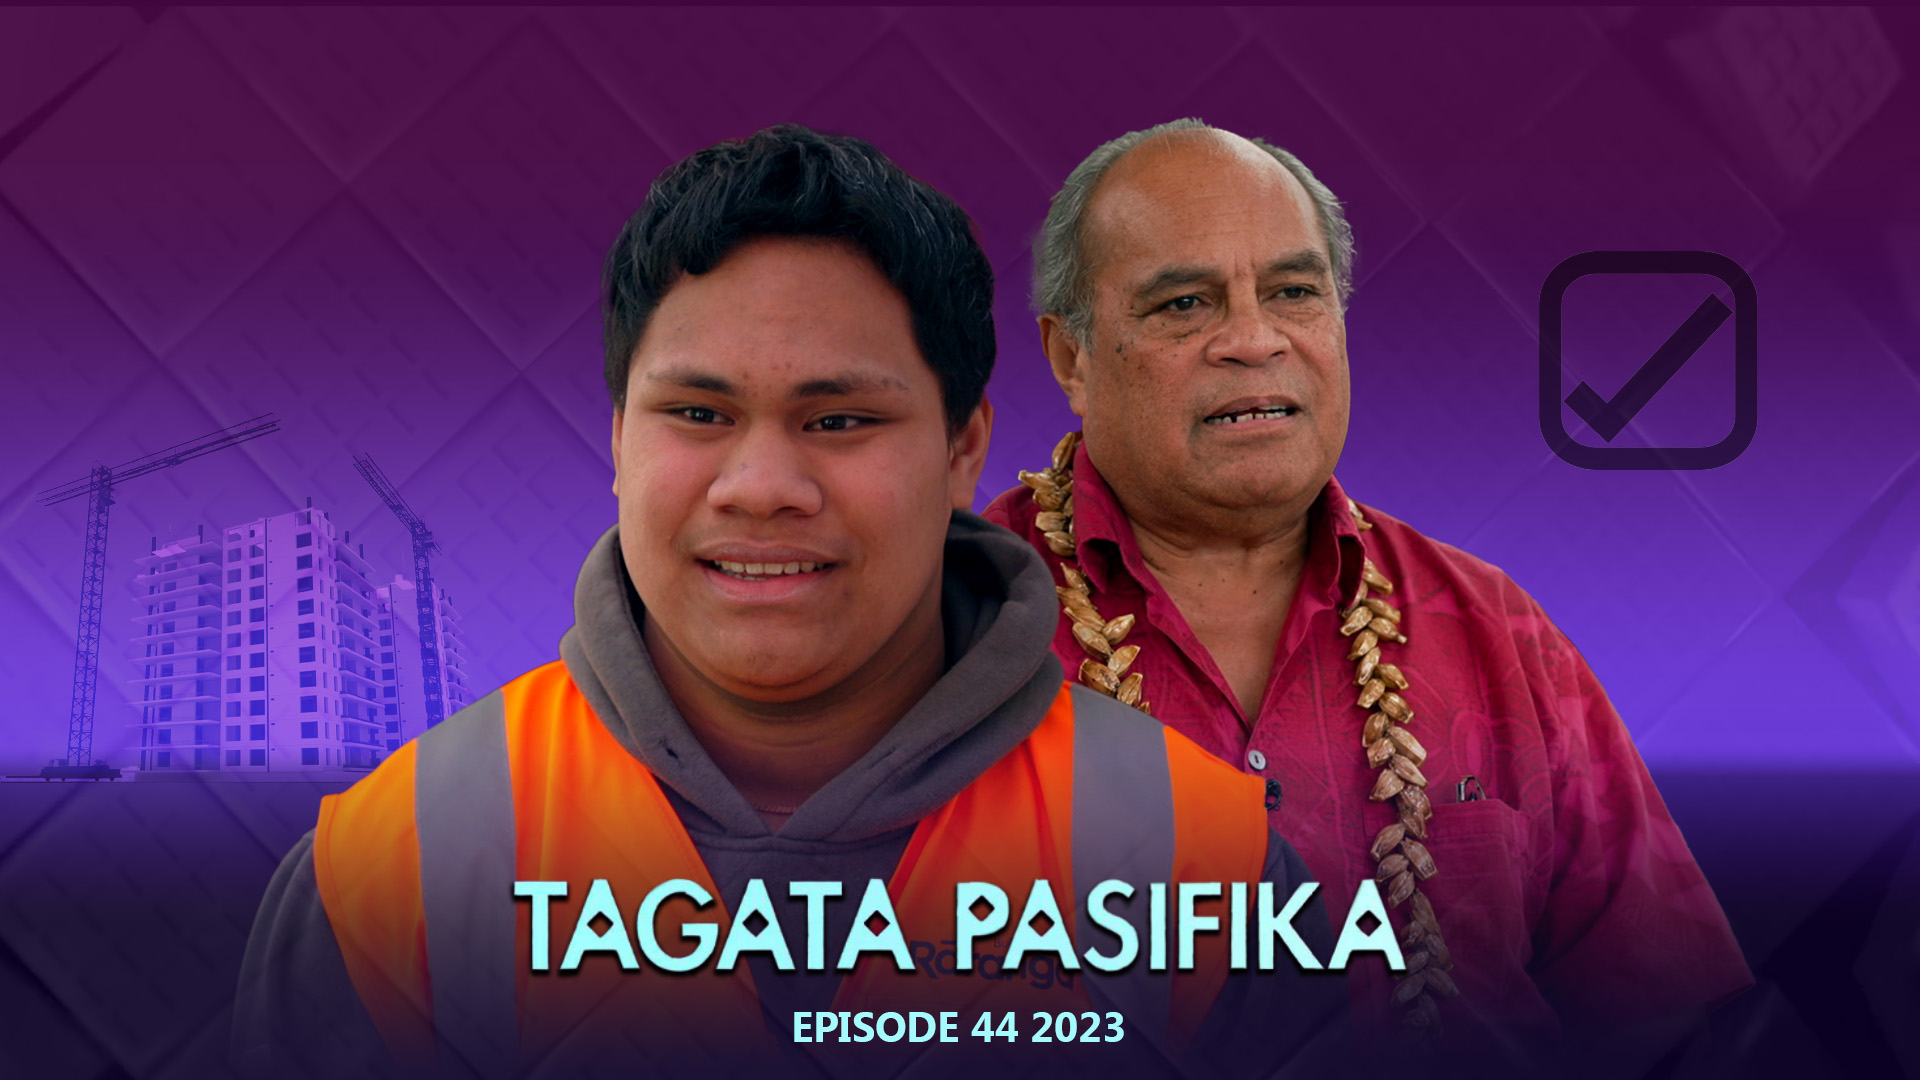 WATCH: Tagata Pasifika 2023 Episode 44